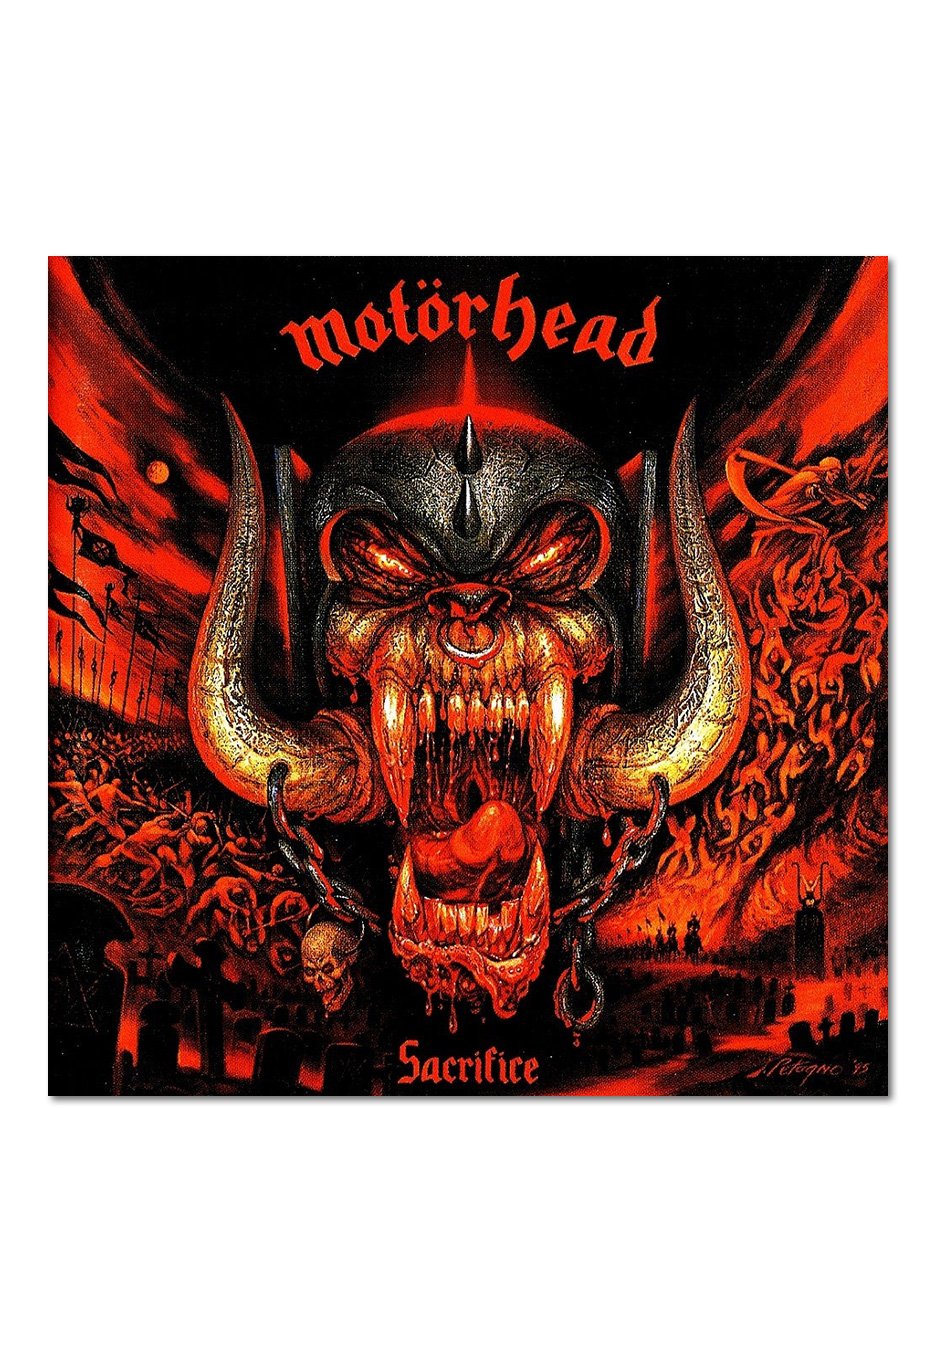 Motörhead - Sacrifice - Digipak CD